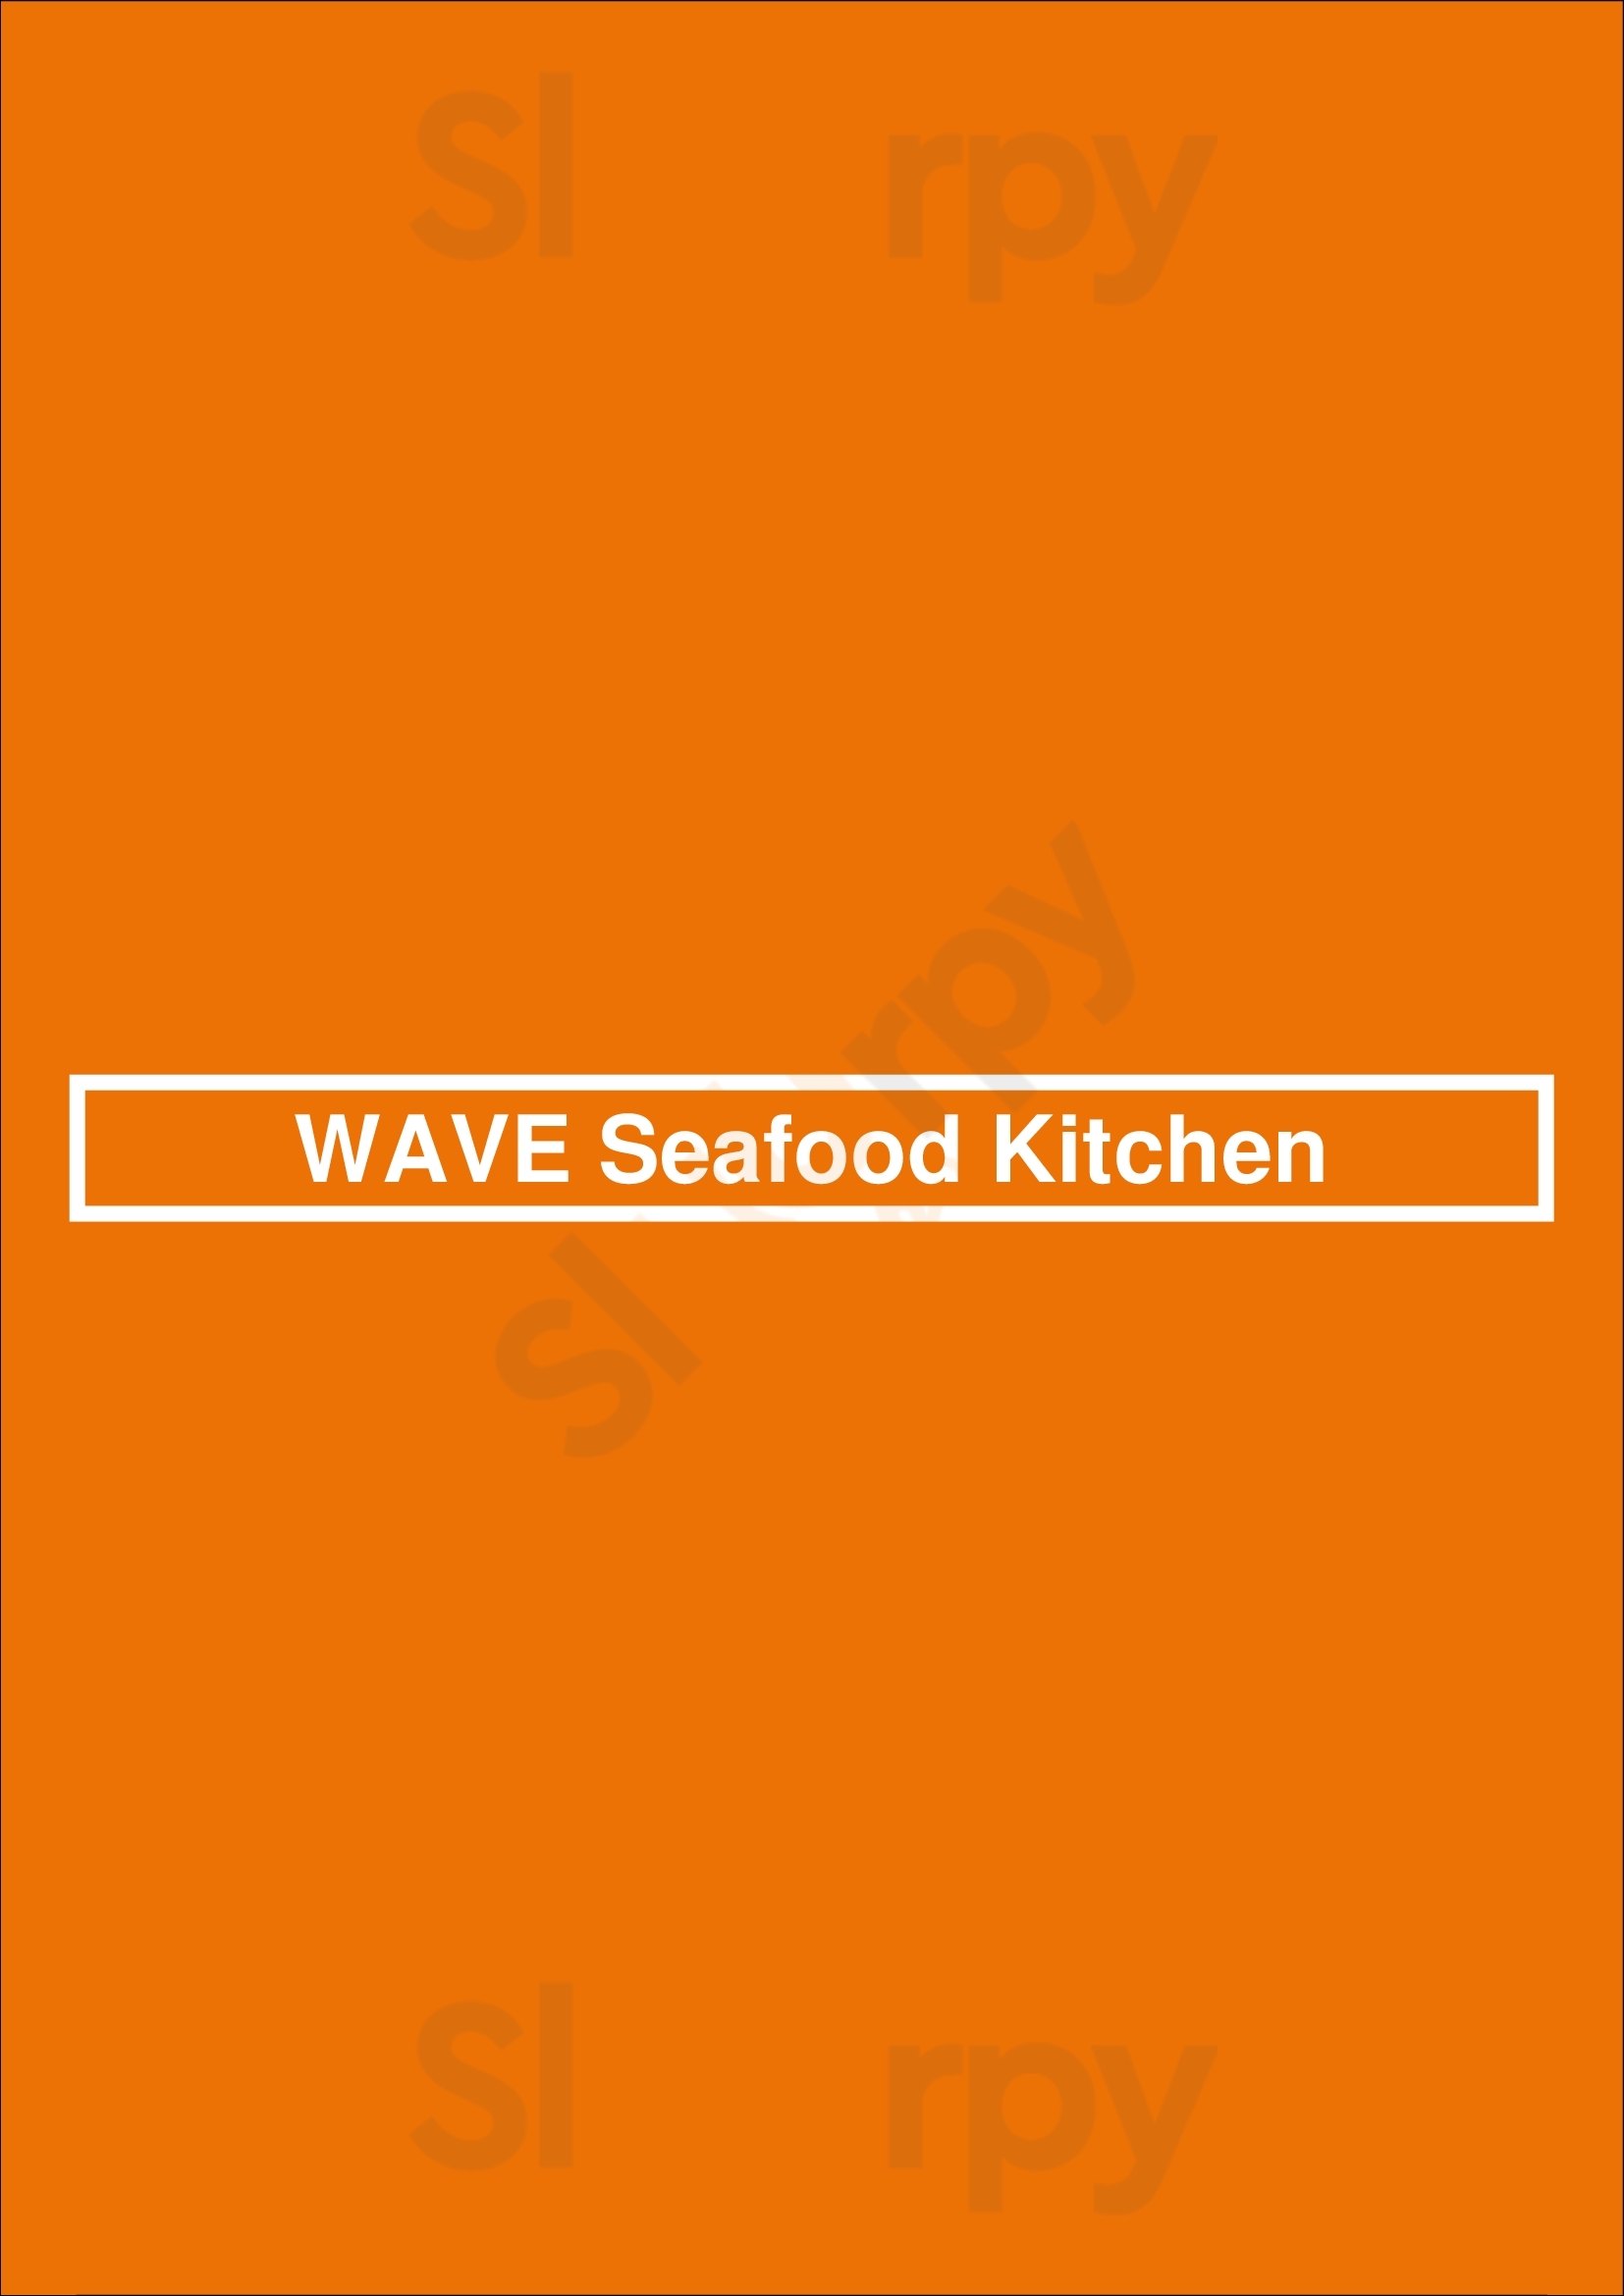 Wave Seafood Kitchen Port Jefferson Menu - 1